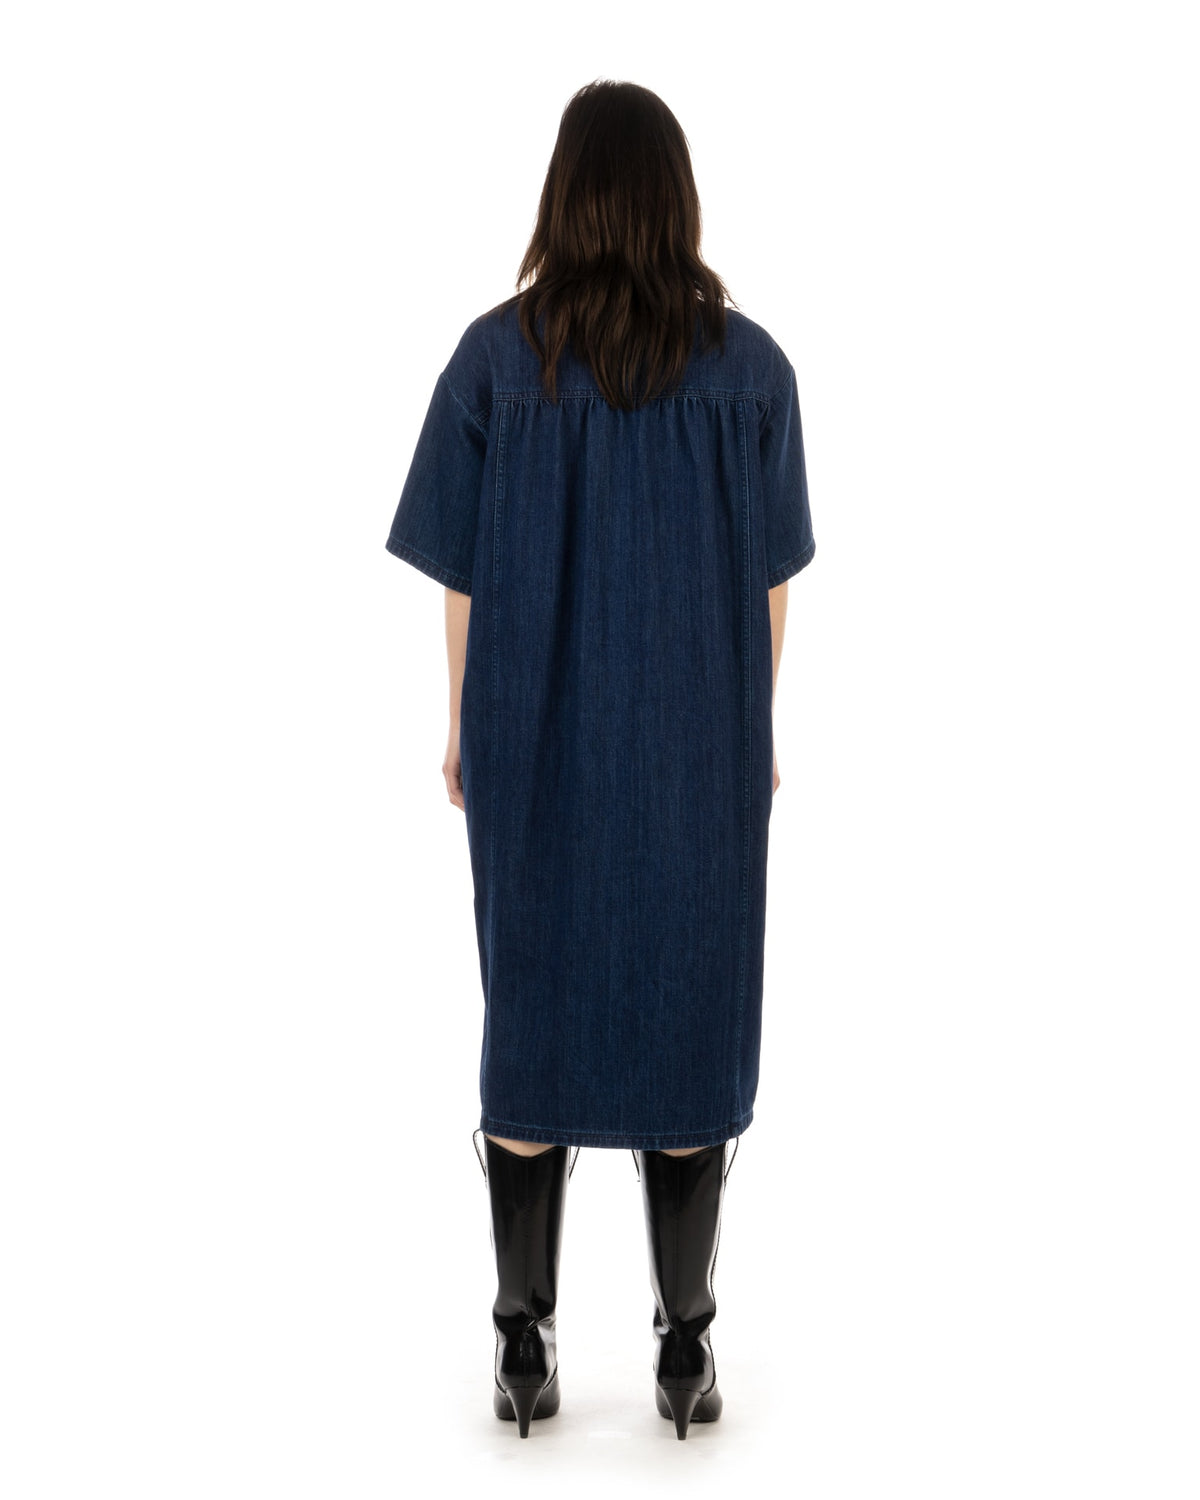 FACON JACMIN | Robyn Shirt Dress Navy - Concrete